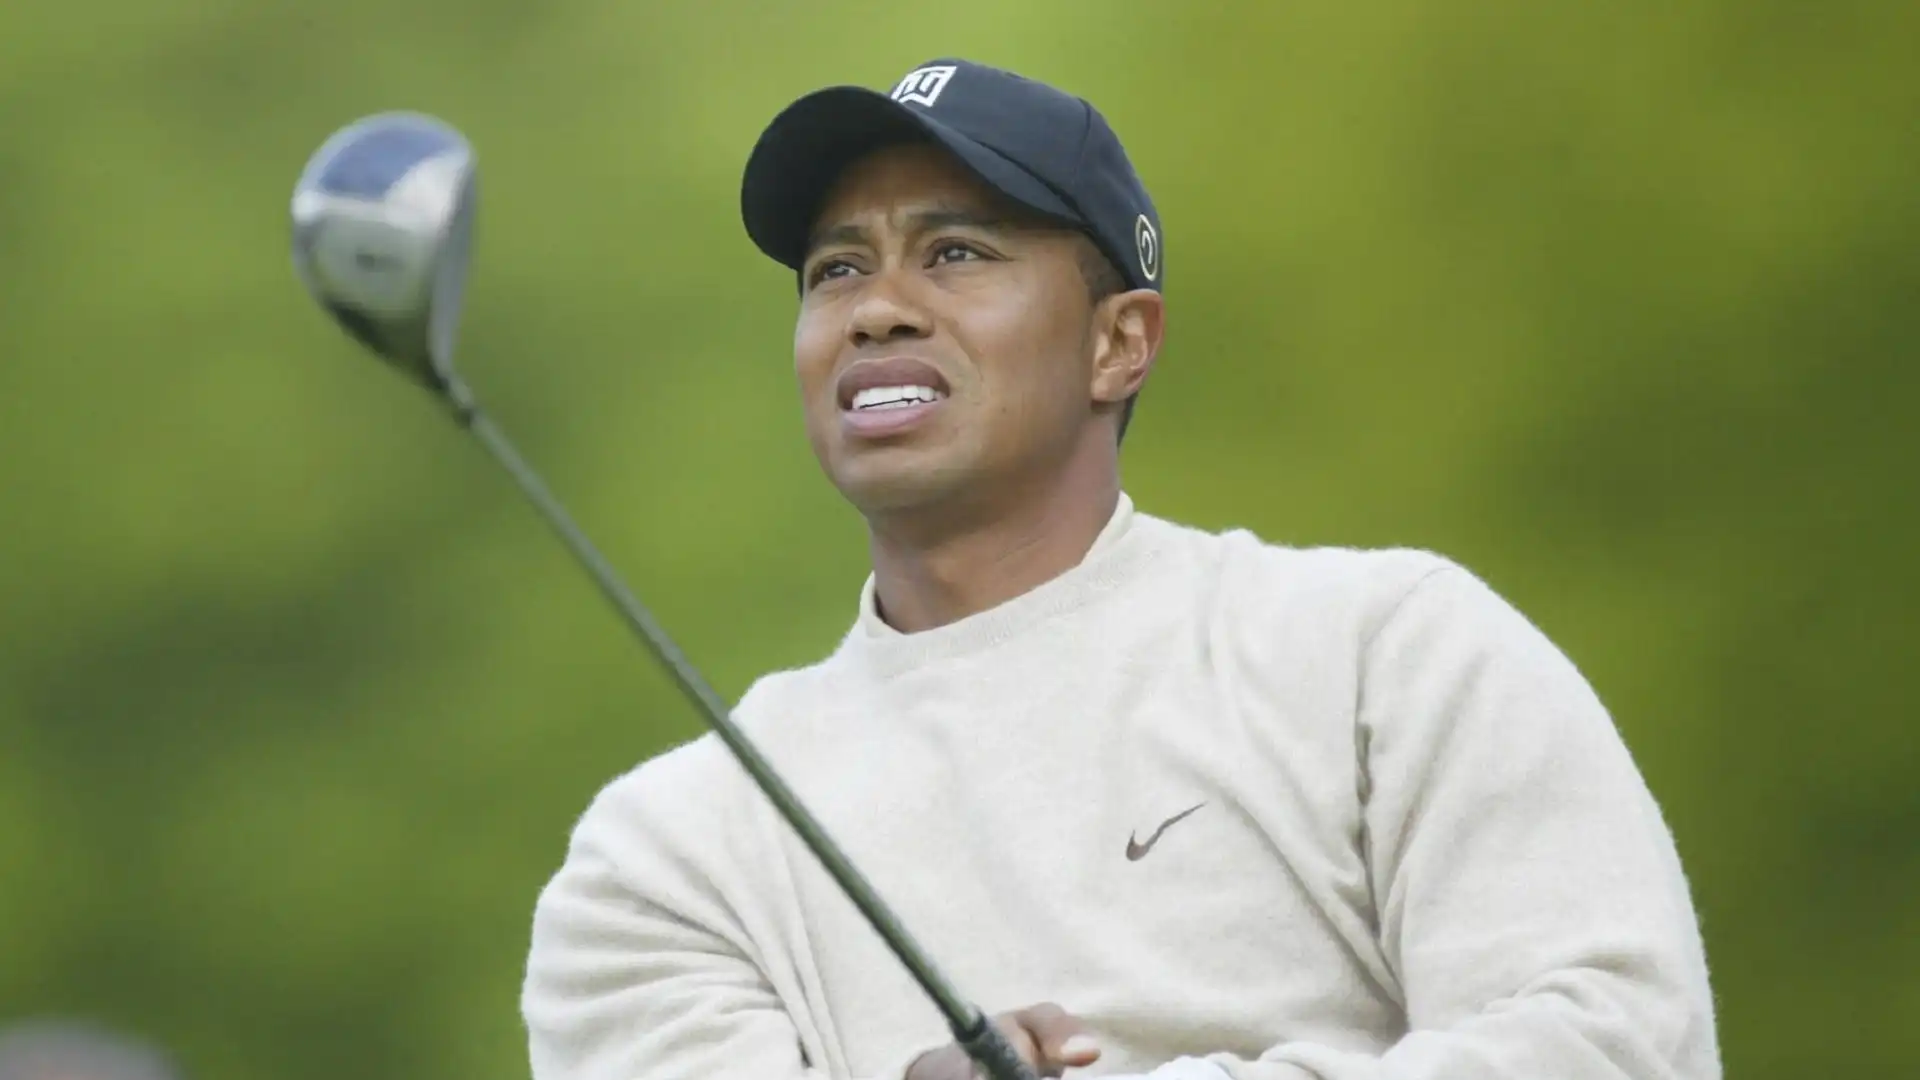 2003: Tiger Woods (Golf), guadagni totali stimati 78 milioni di dollari